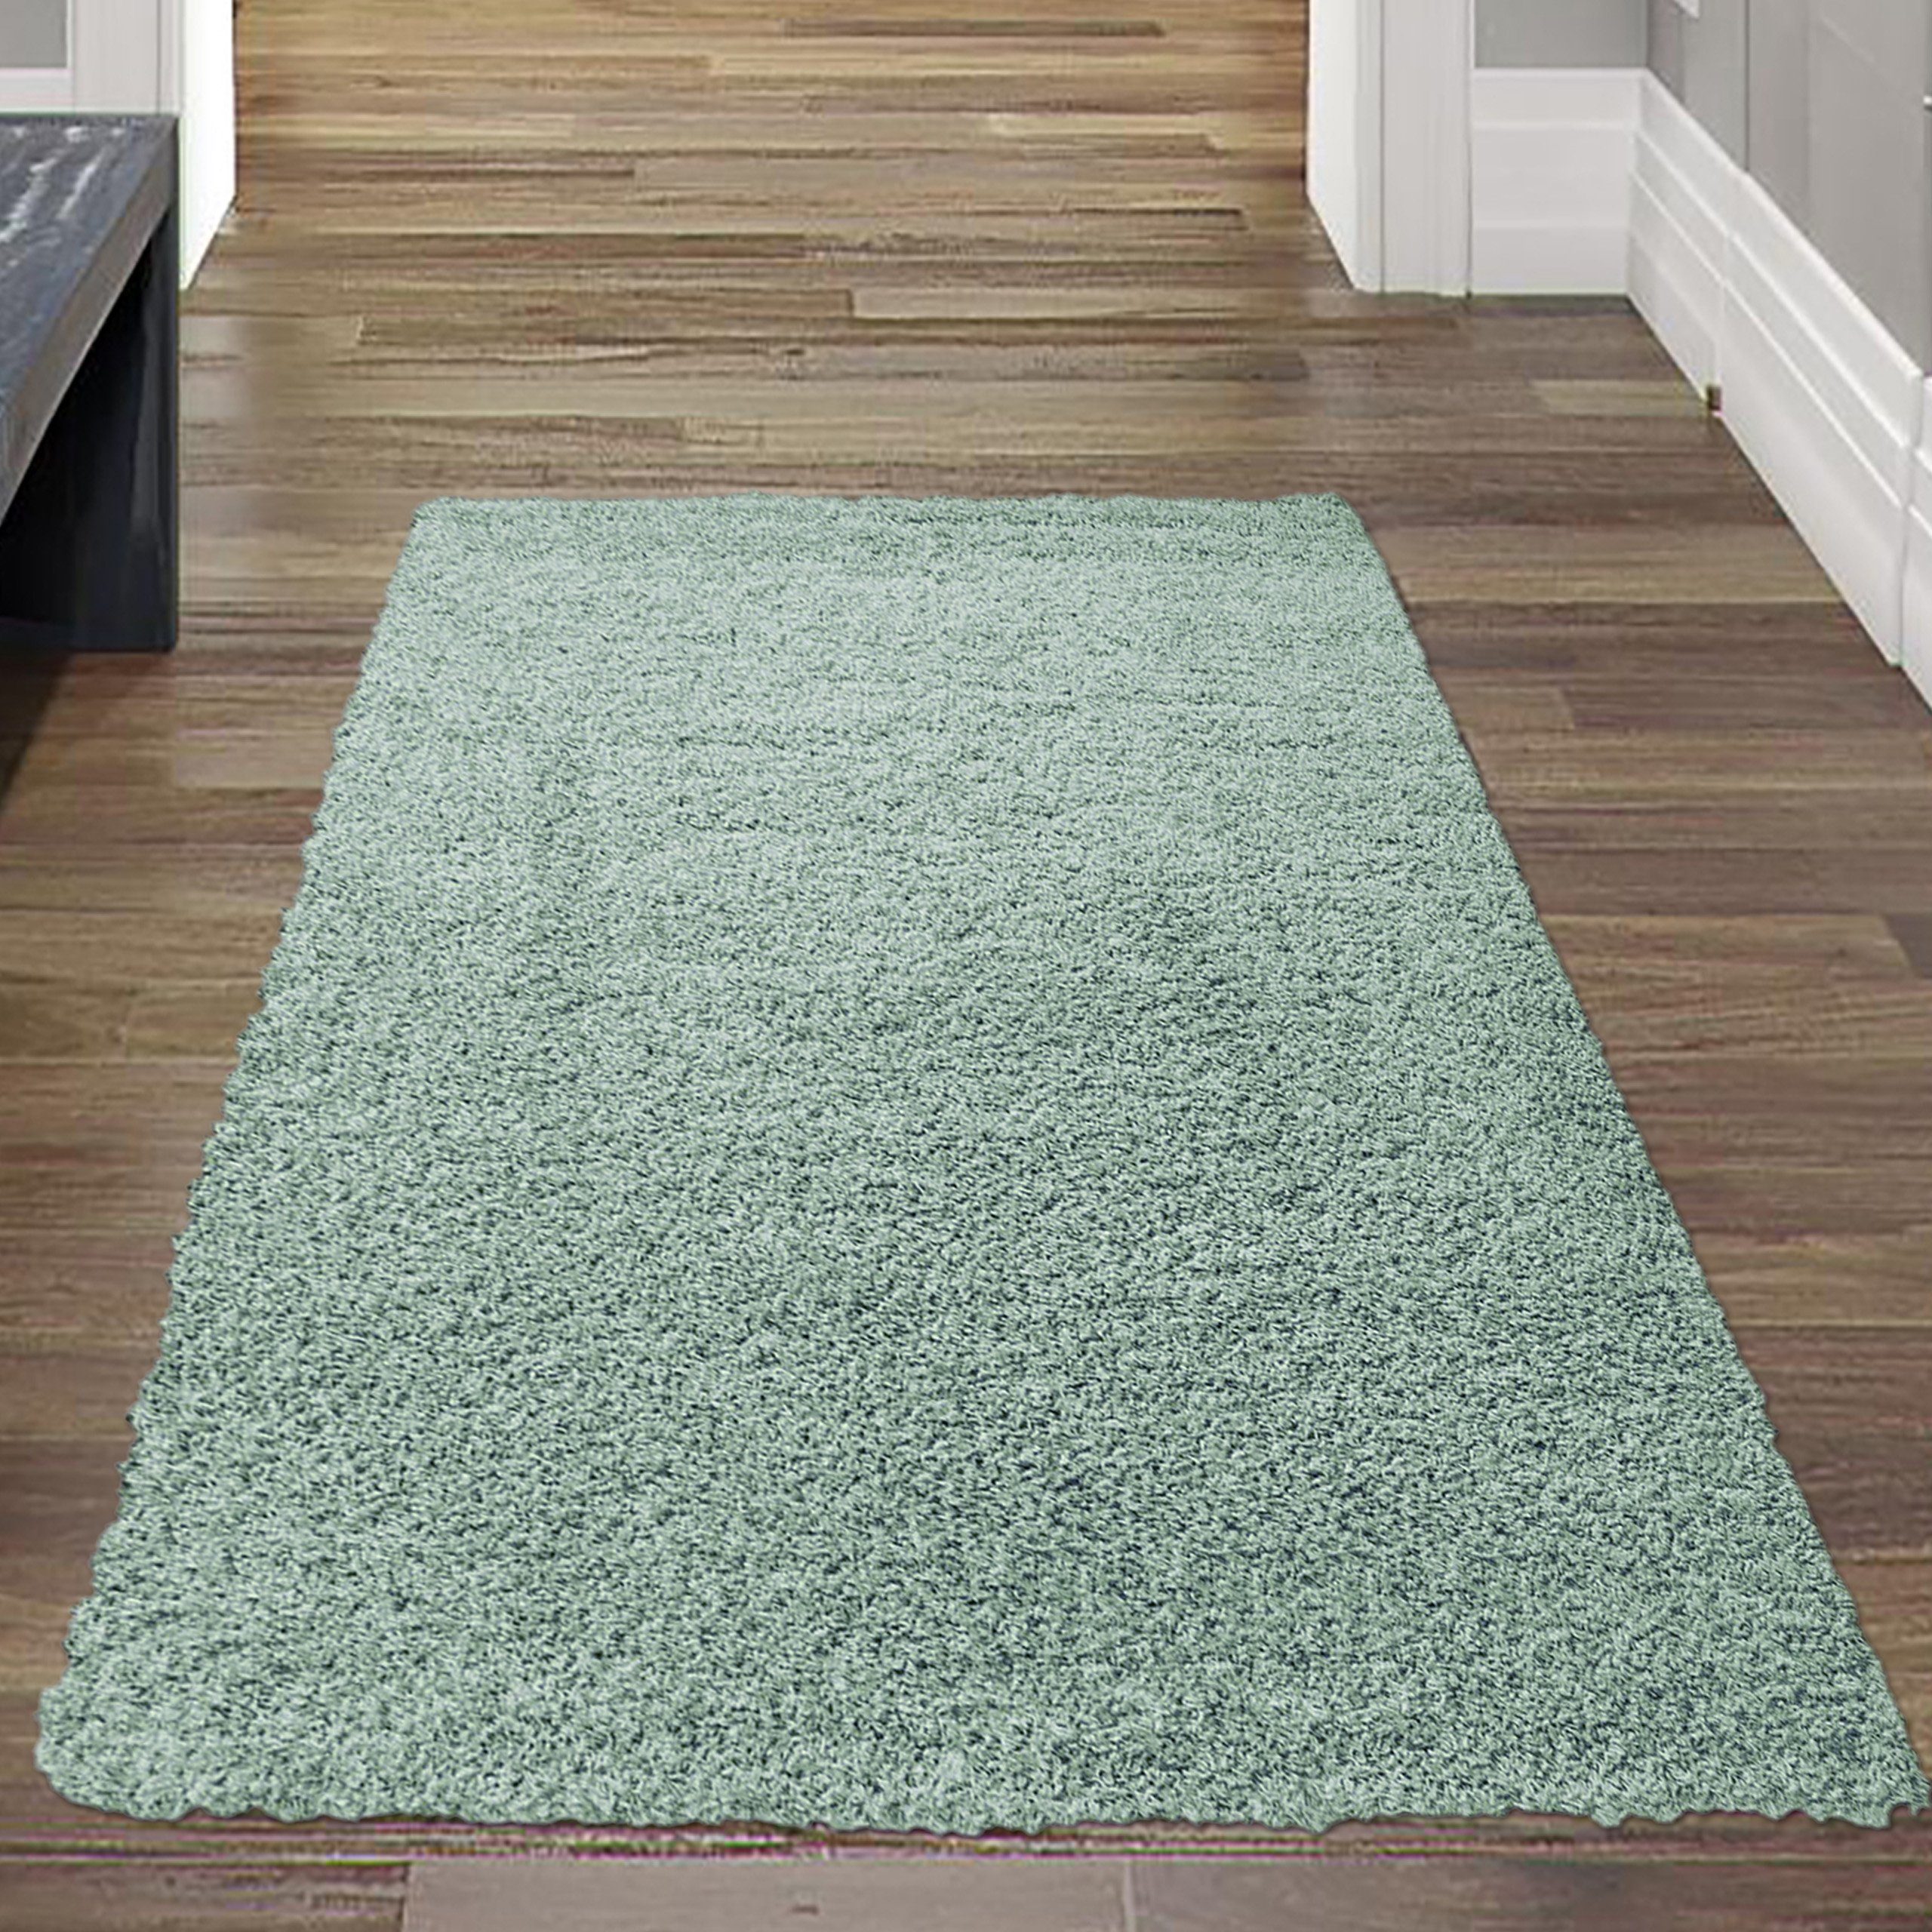 Teppich Flauschiger Shaggy Teppich in petrol/grau, Teppich-Traum, rechteckig, Höhe: 33 mm